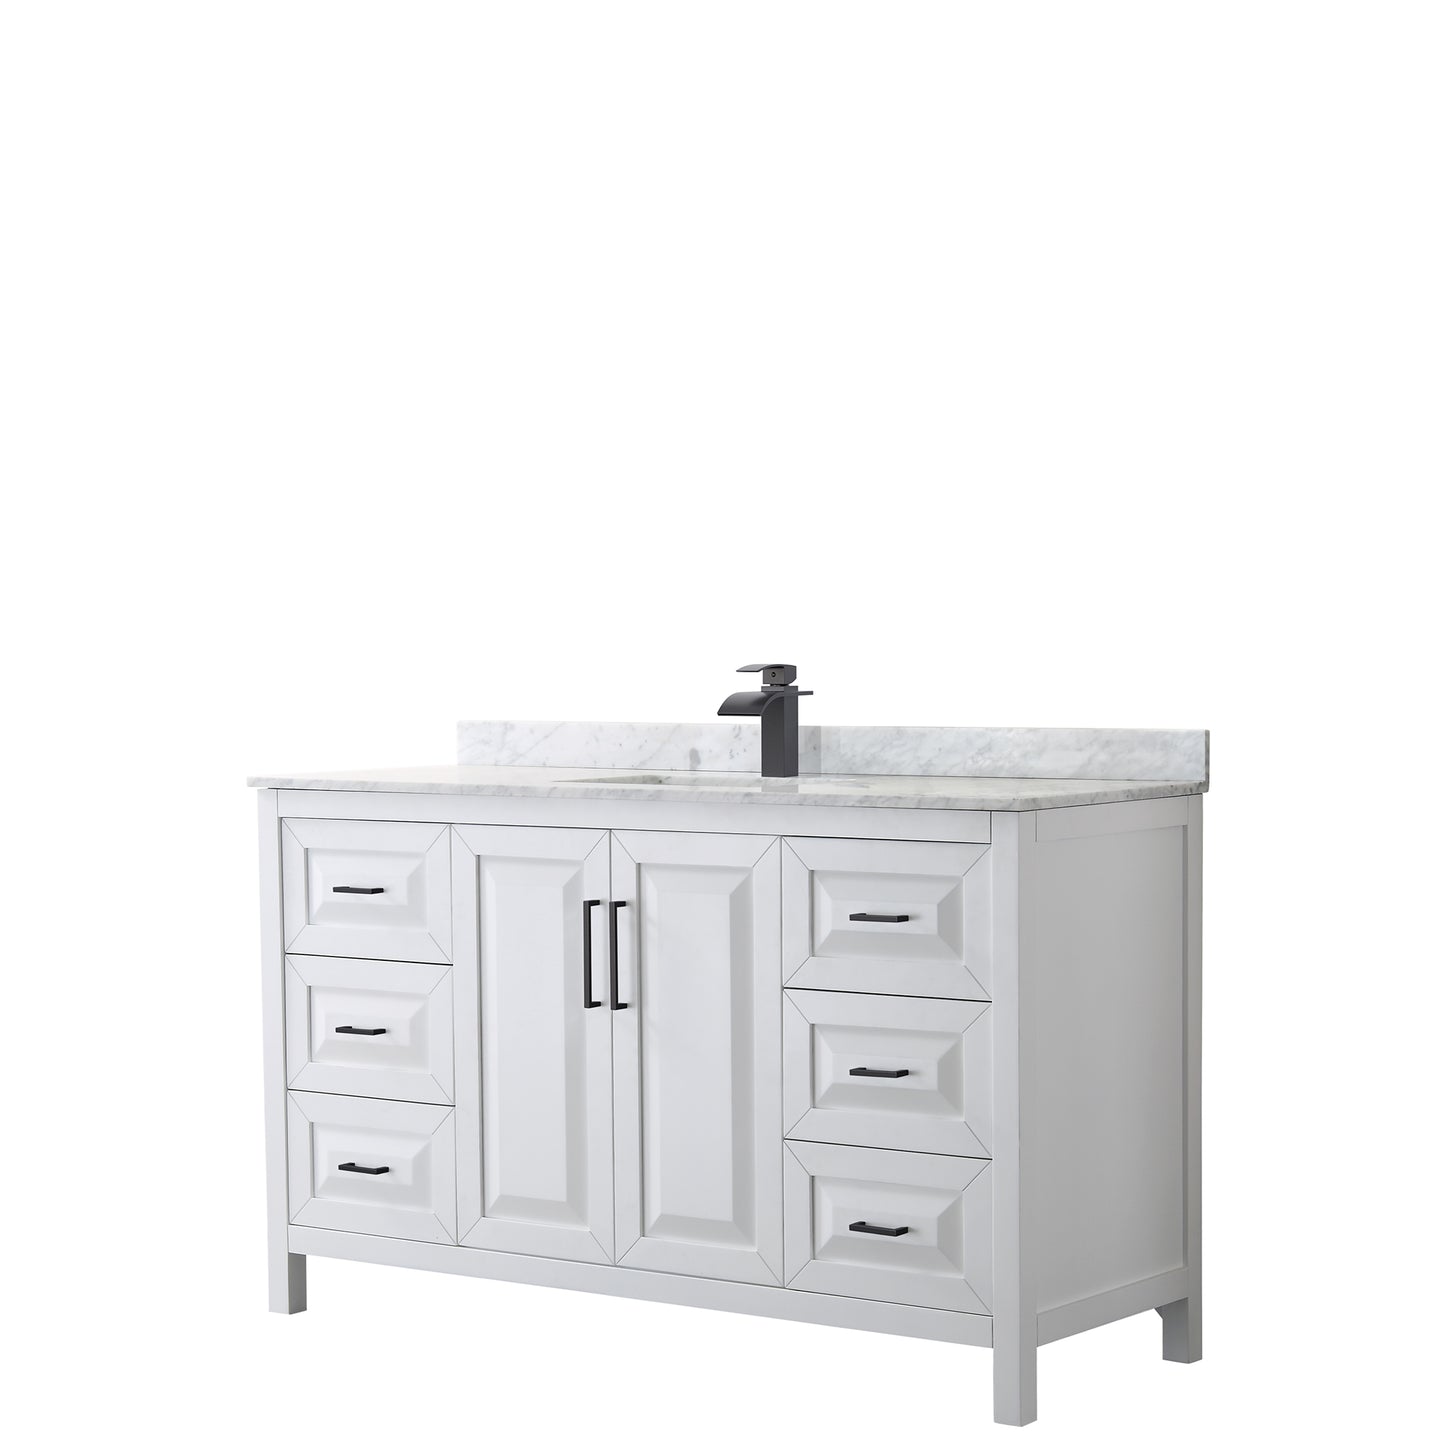 Wyndham Daria 60 Inch Single Bathroom Vanity White Carrara Marble Countertop with Undermount Square Sink in Matte Black Trim - Luxe Bathroom Vanities